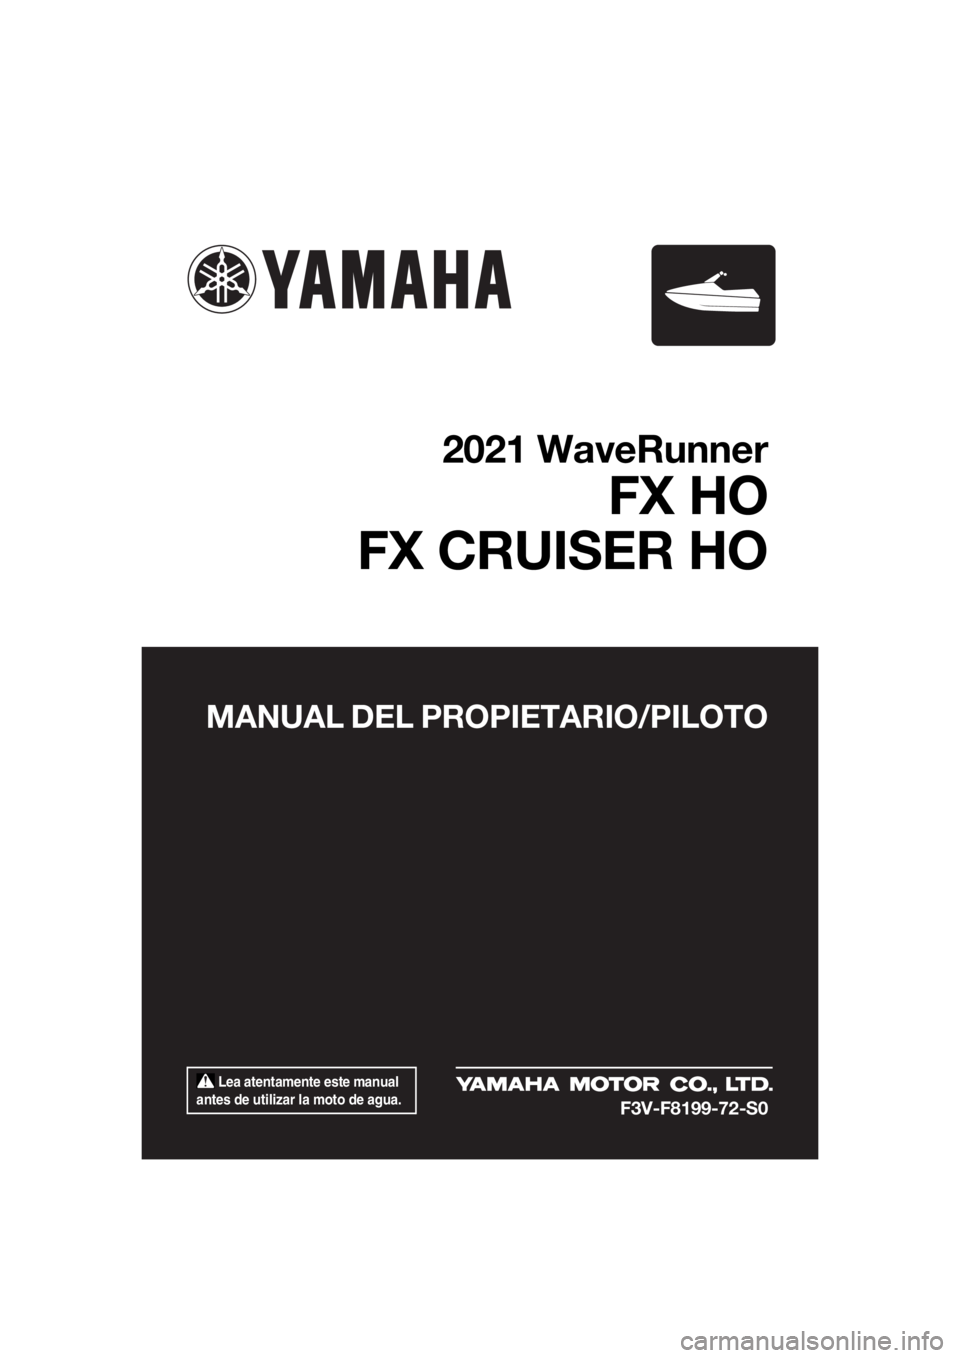 YAMAHA FX HO CRUISER 2021  Manuale de Empleo (in Spanish)  Lea atentamente este manual 
antes de utilizar la moto de agua.
MANUAL DEL PROPIETARIO/PILOTO
2021 WaveRunner
FX HO
FX CRUISER HO
F3V-F8199-72-S0
UF3V72S0.book  Page 1  Tuesday, June 16, 2020  11:25 